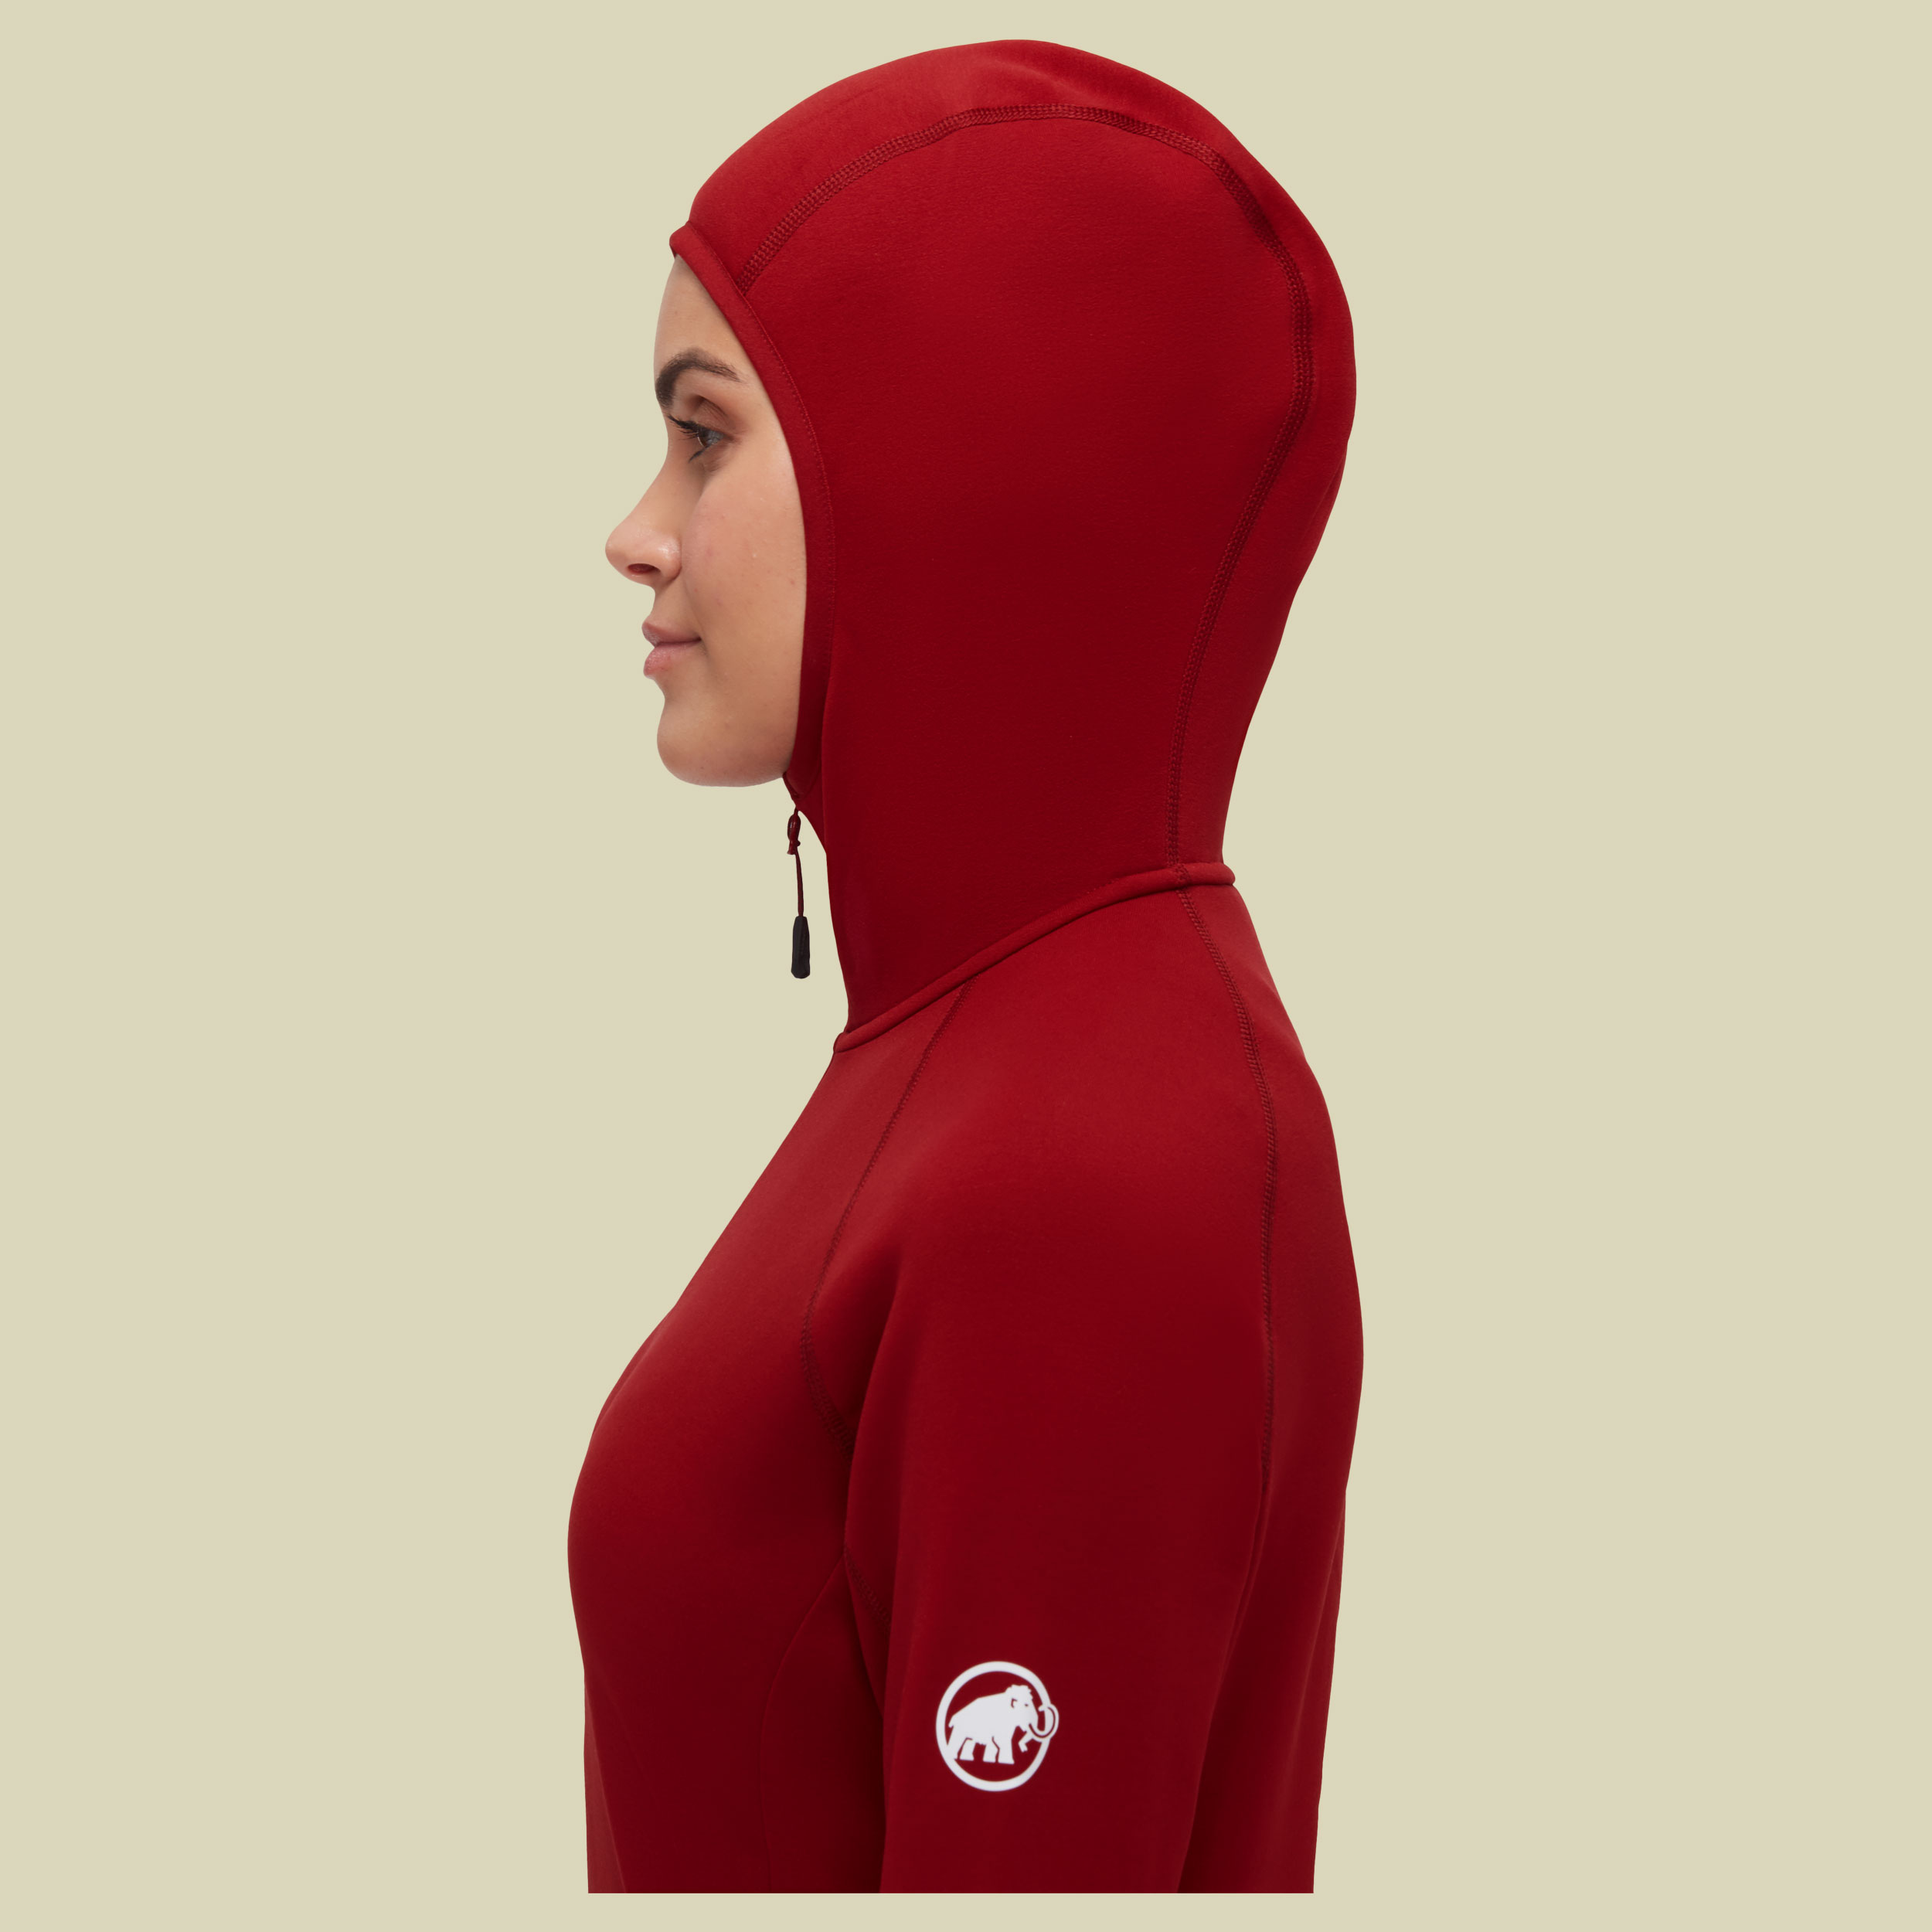 Aconcagua ML Hooded Jacket Women Größe S Farbe blood red